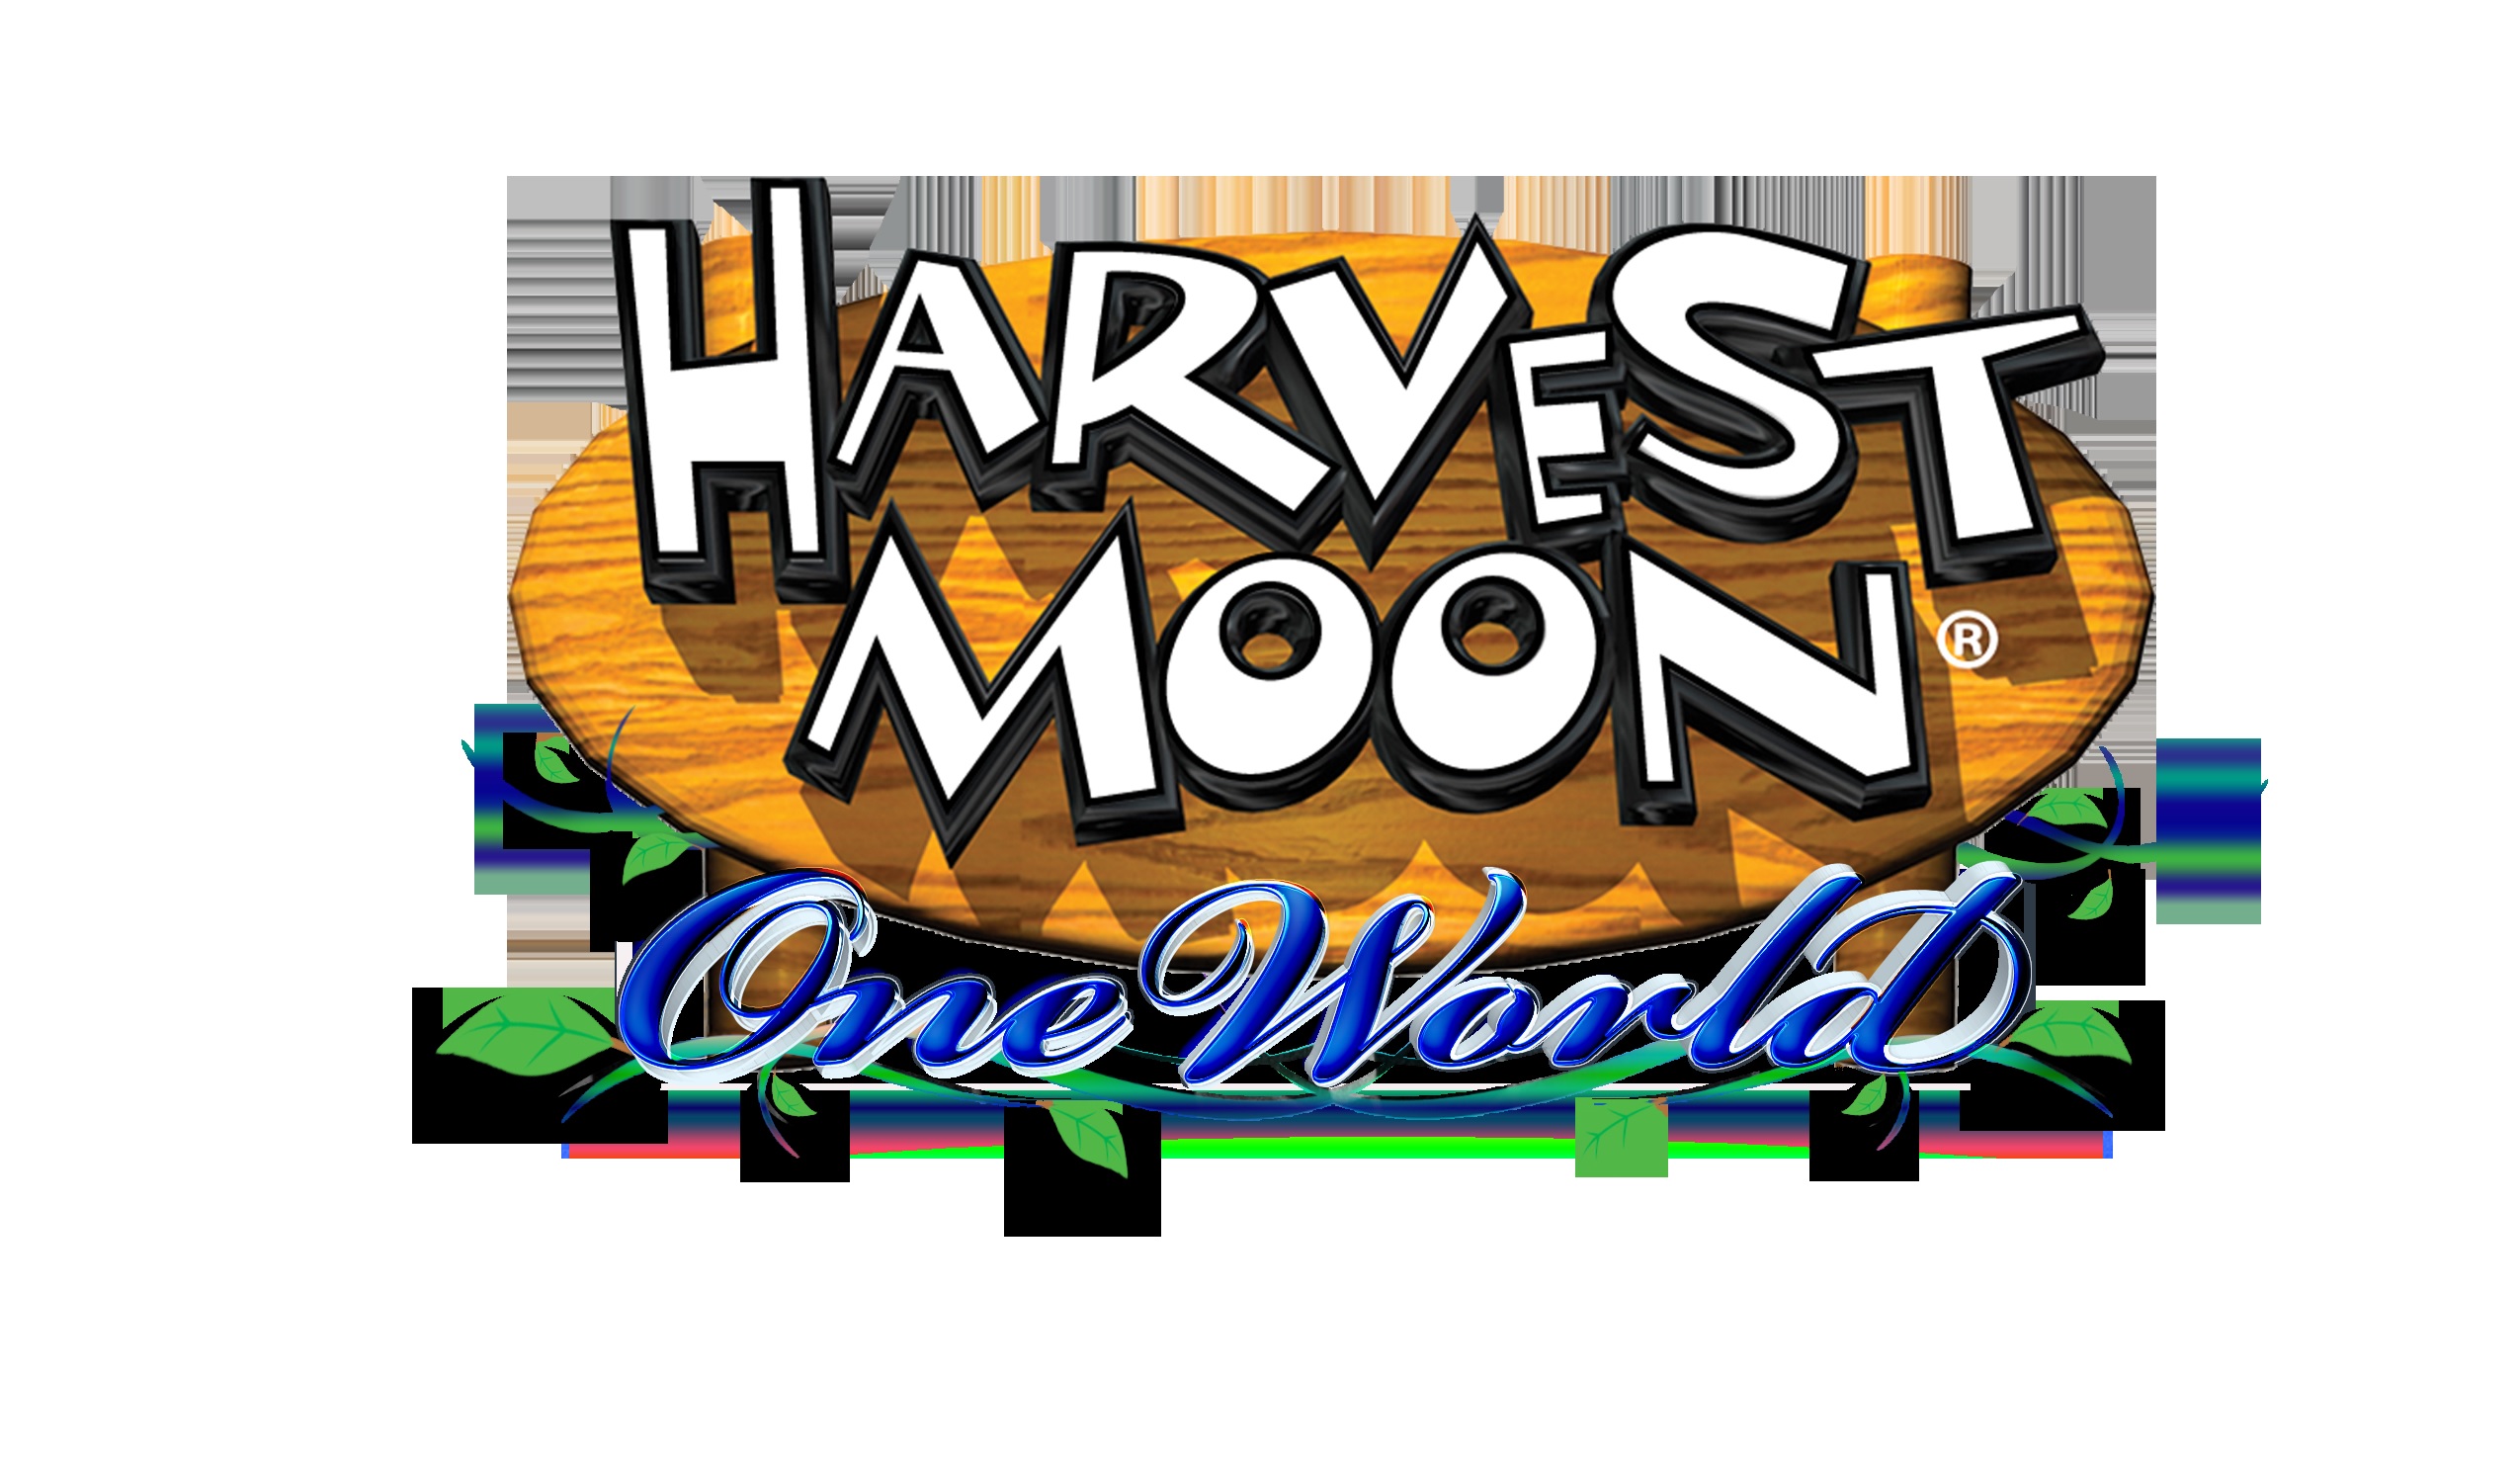 harvest moon nintendo switch